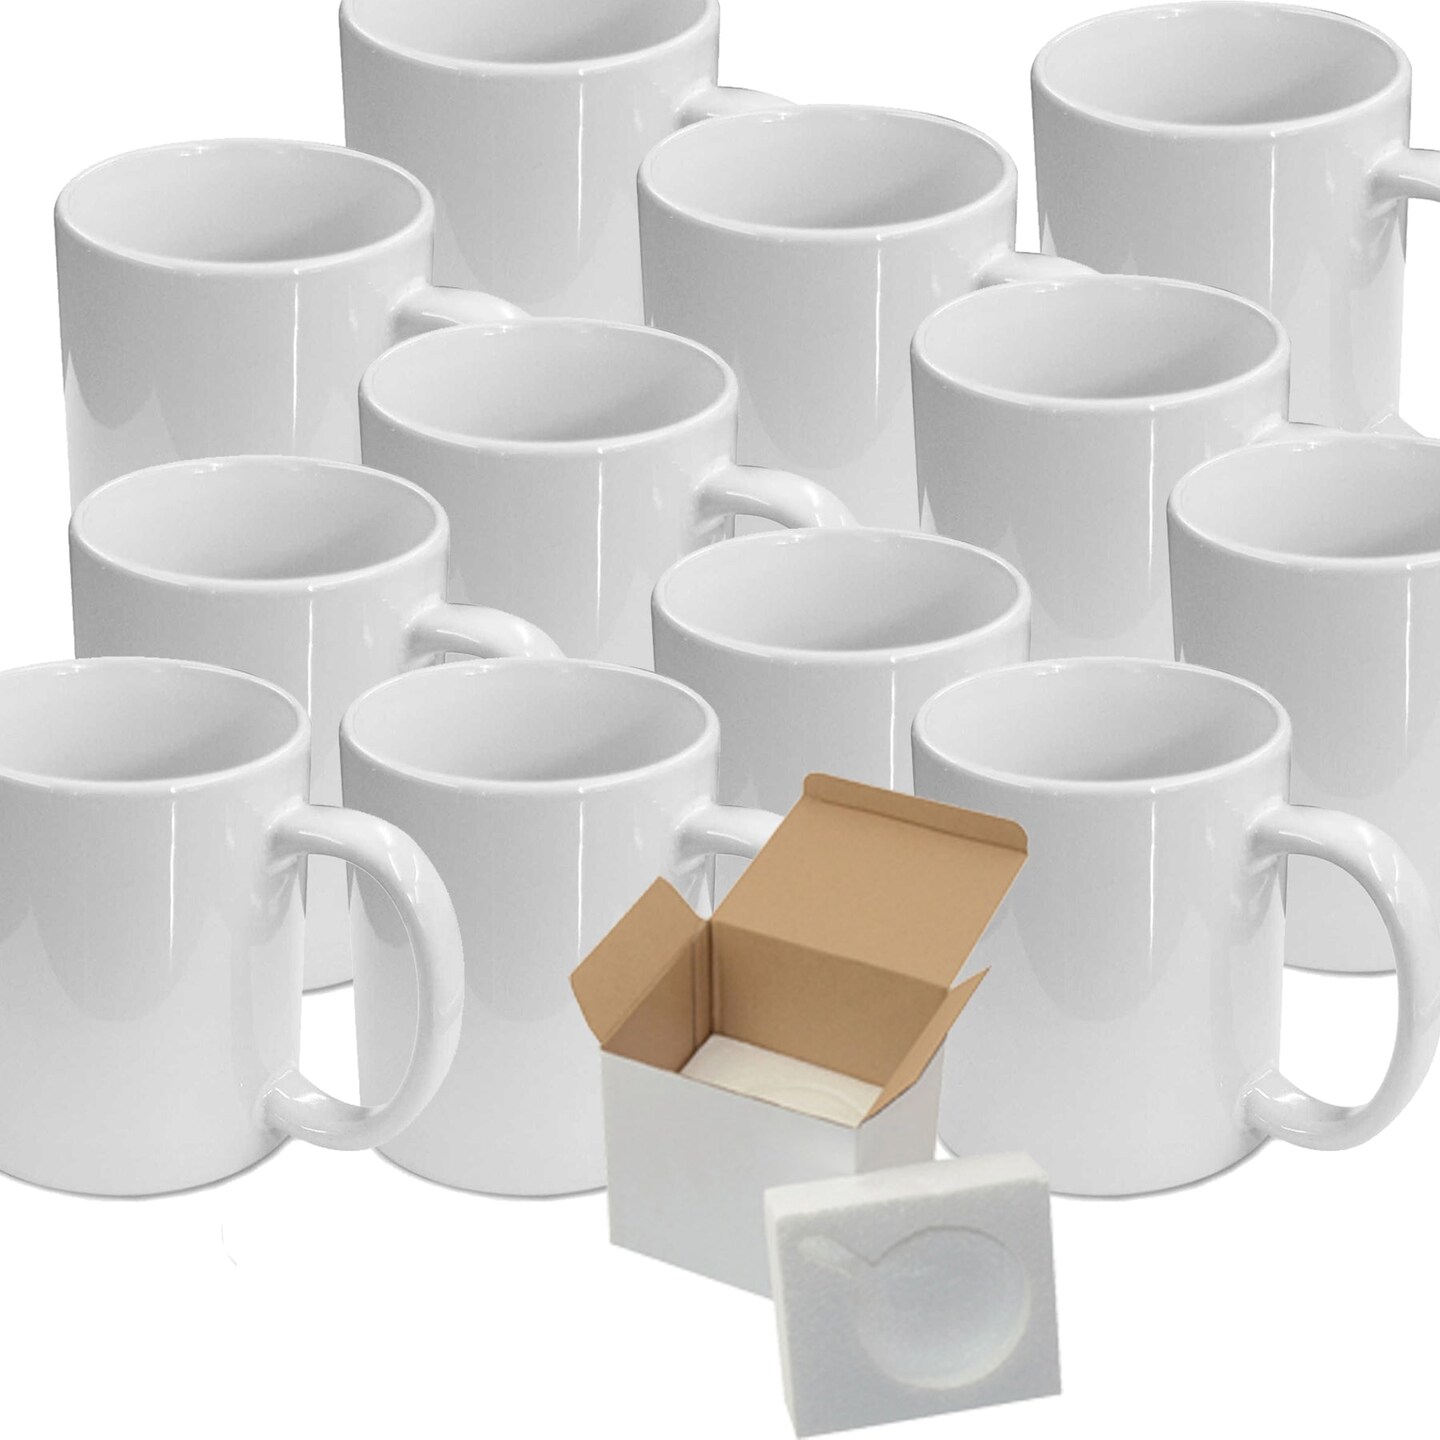 Custom Ceramic Coffee Mugs as Enterprise Promotional Gift to